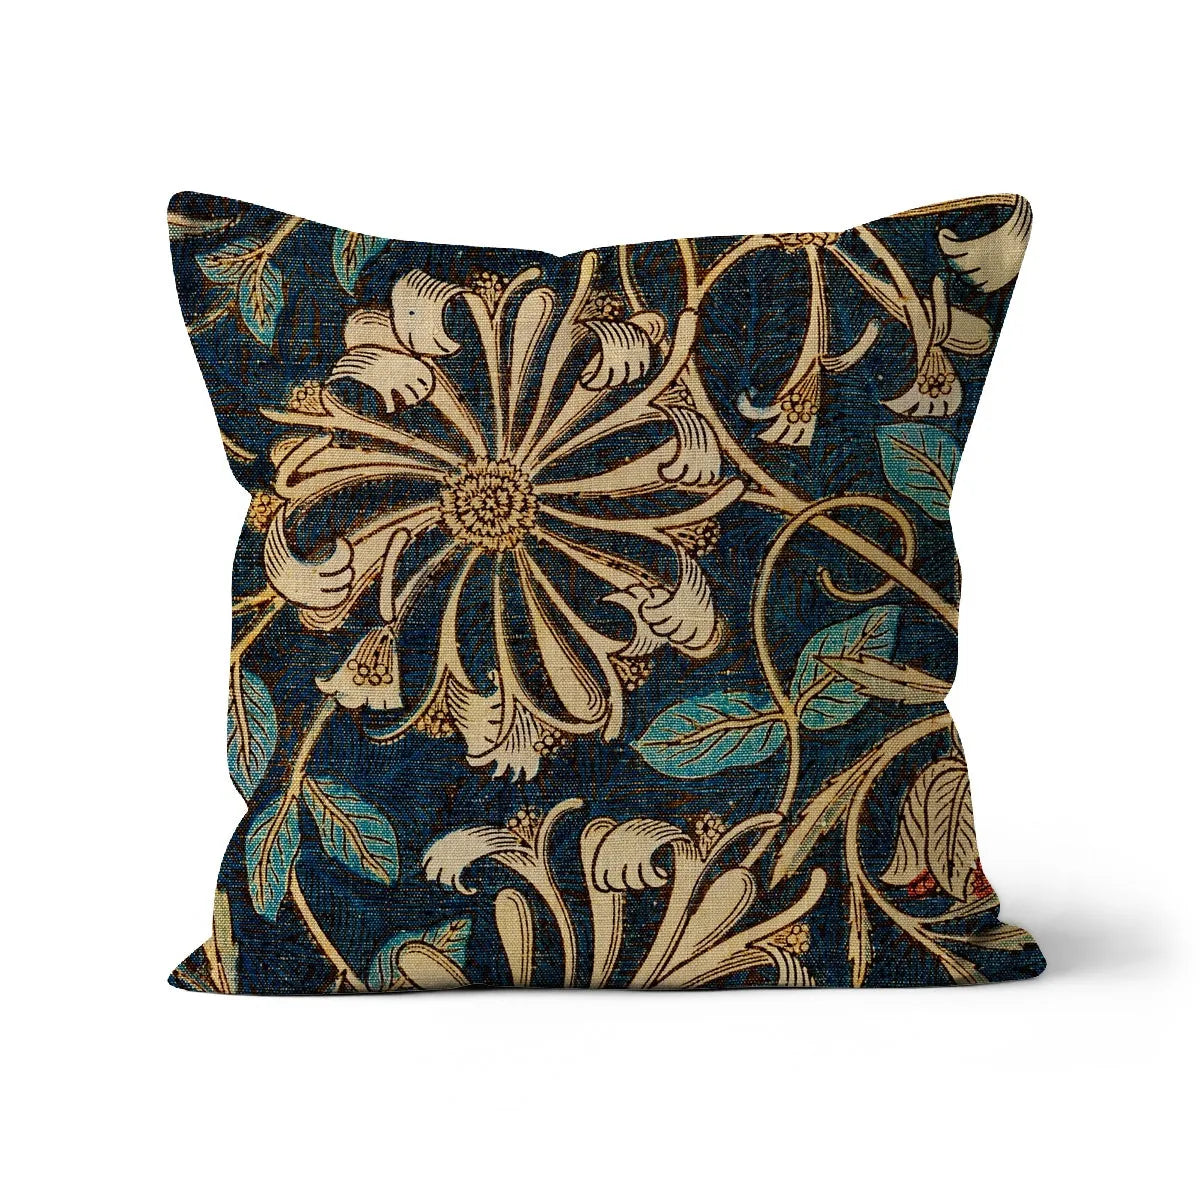 Honeysuckle 3 - William Morris Cushion - Decorative Throw Pillow - Canvas /